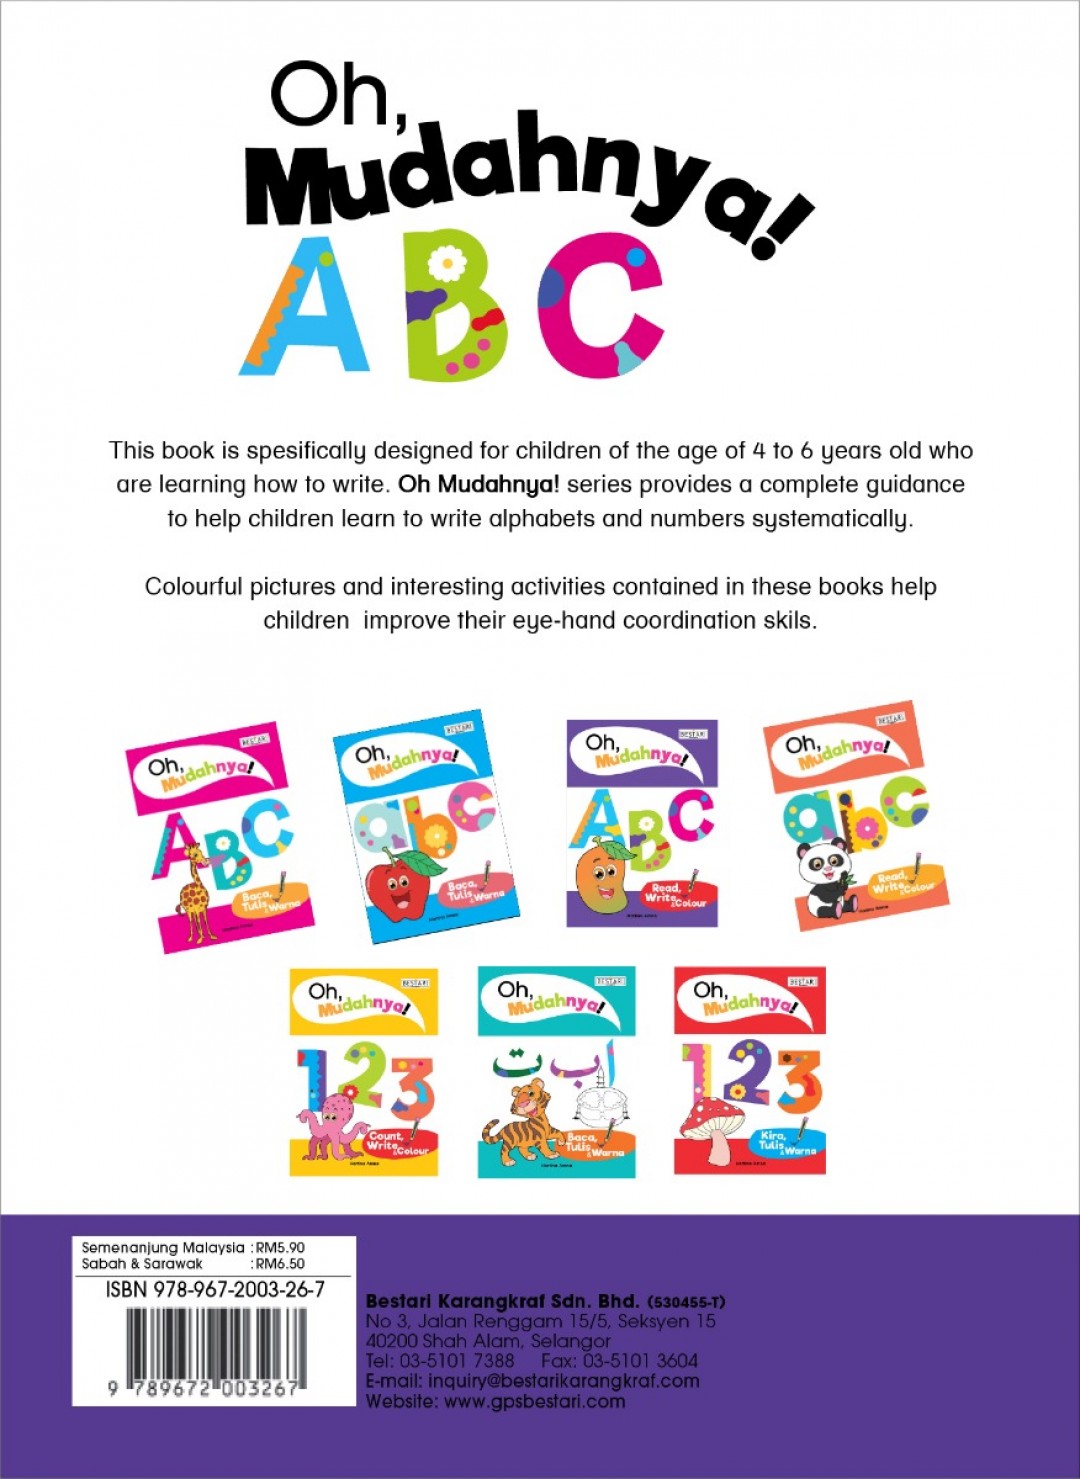 Oh, Mudahnya! ABC Read, Write & Colour